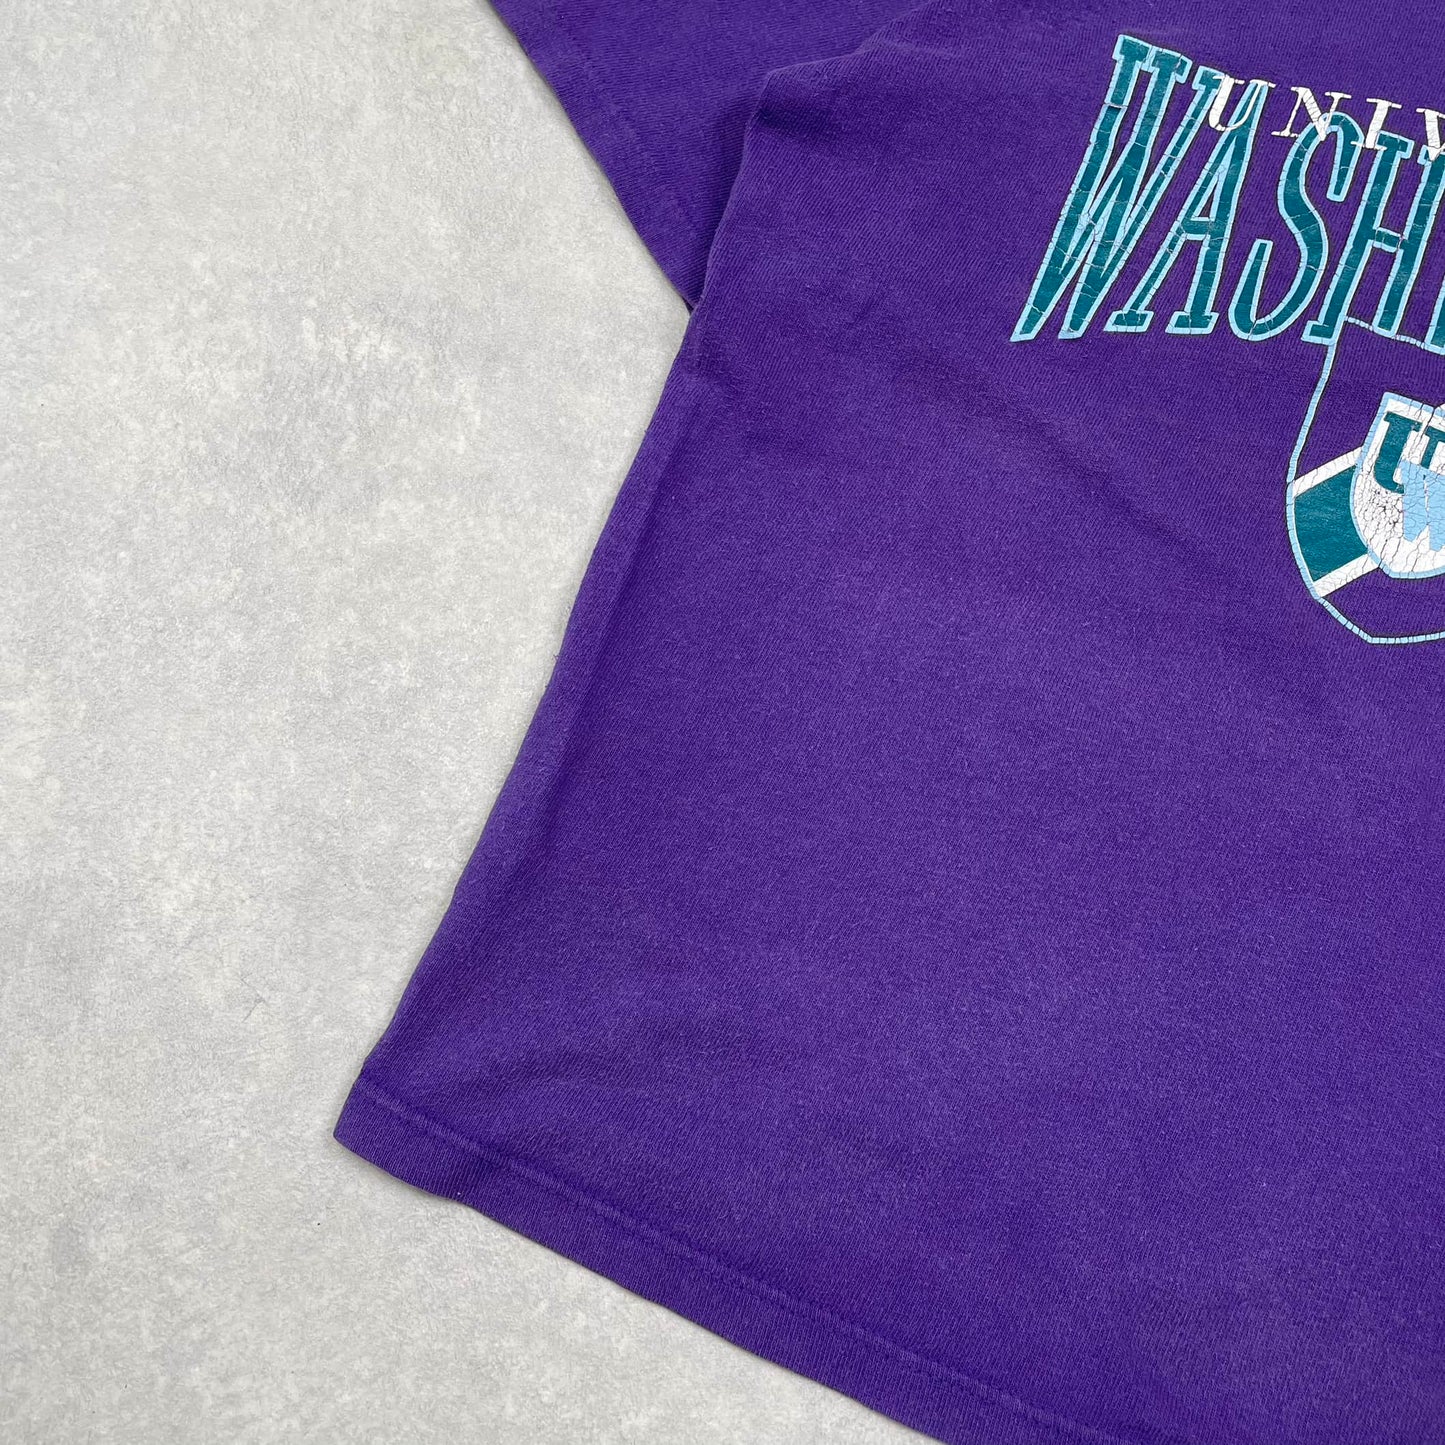 Vintage Champion Single Stitch T-Shirt "Washington University" Made in USA